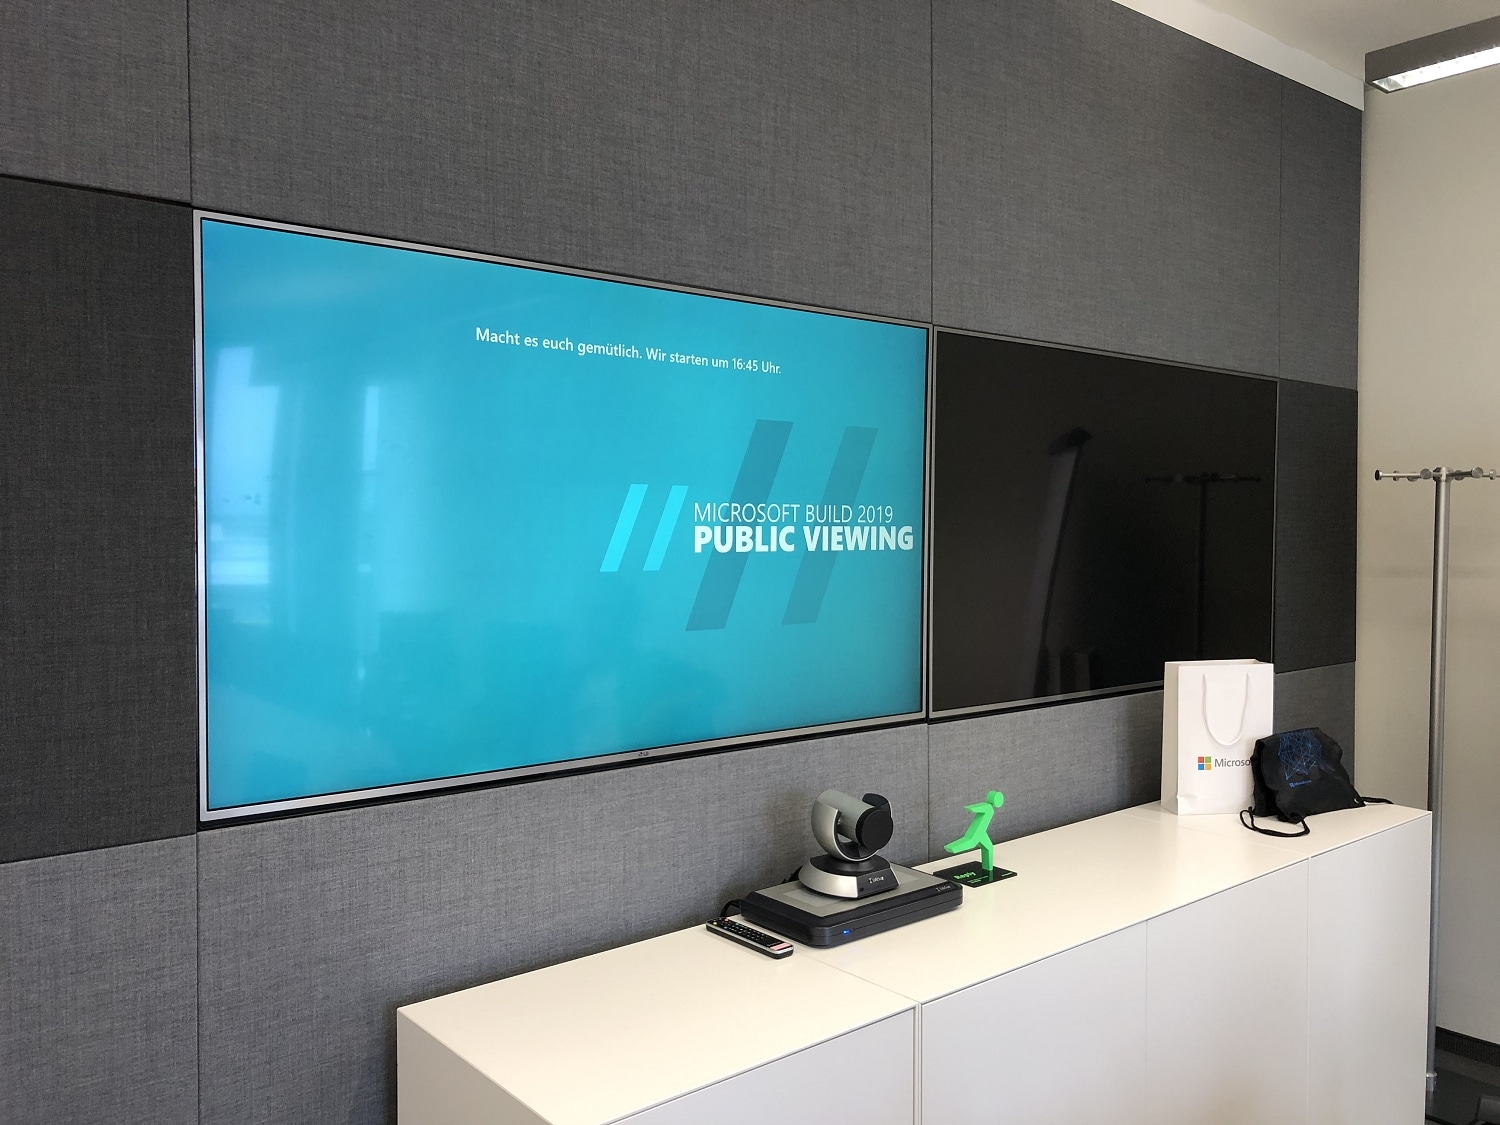 Microsoft Build 2019 Public Viewing Start